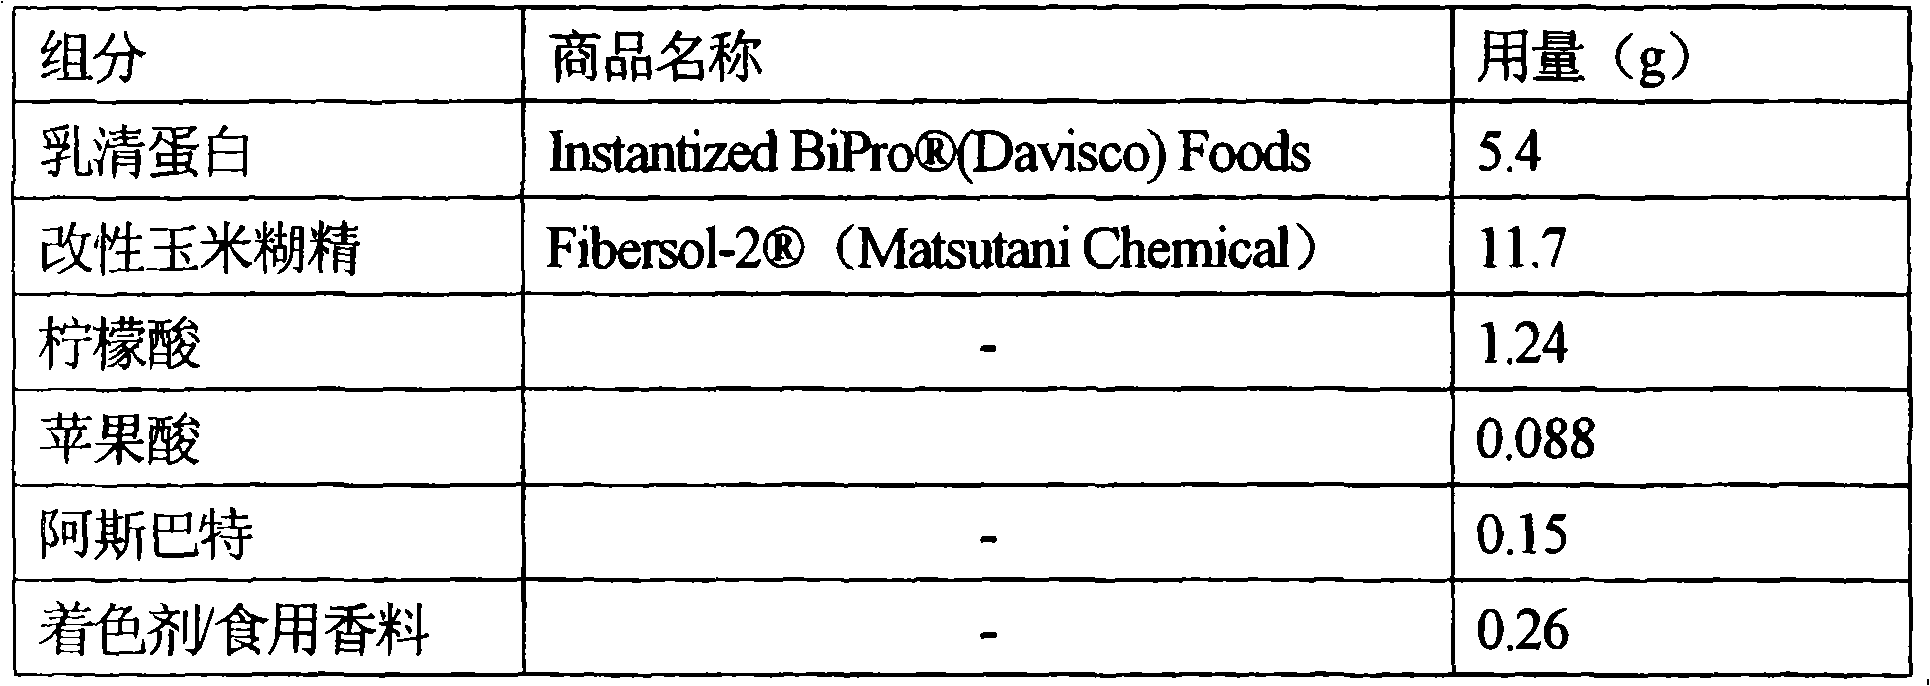 Powdered beverage composition